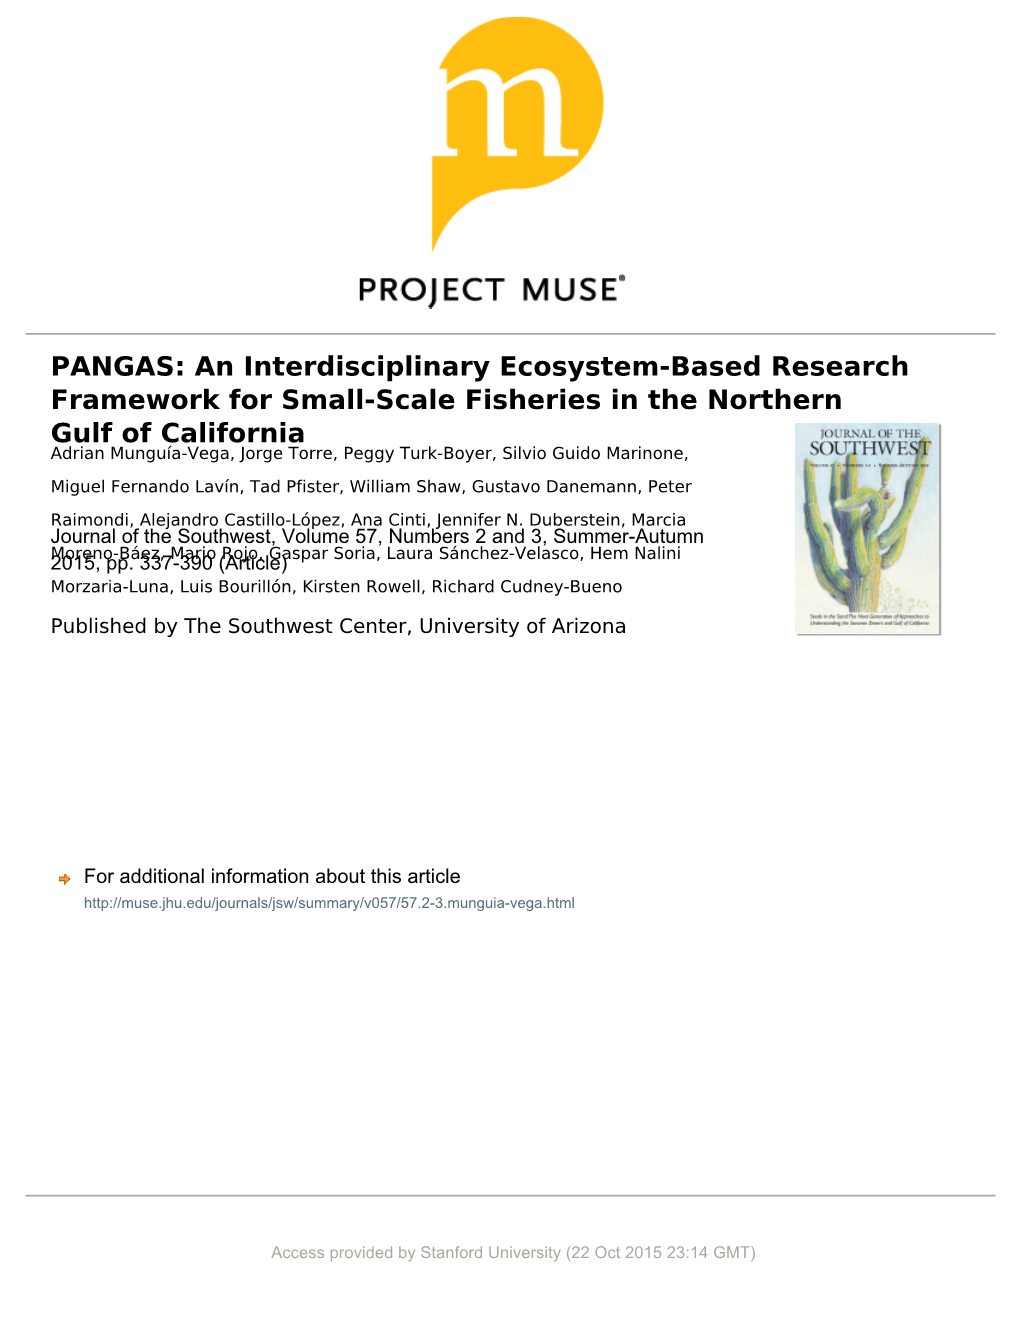 PANGAS: an Interdisciplinary Ecosystem-Based Research